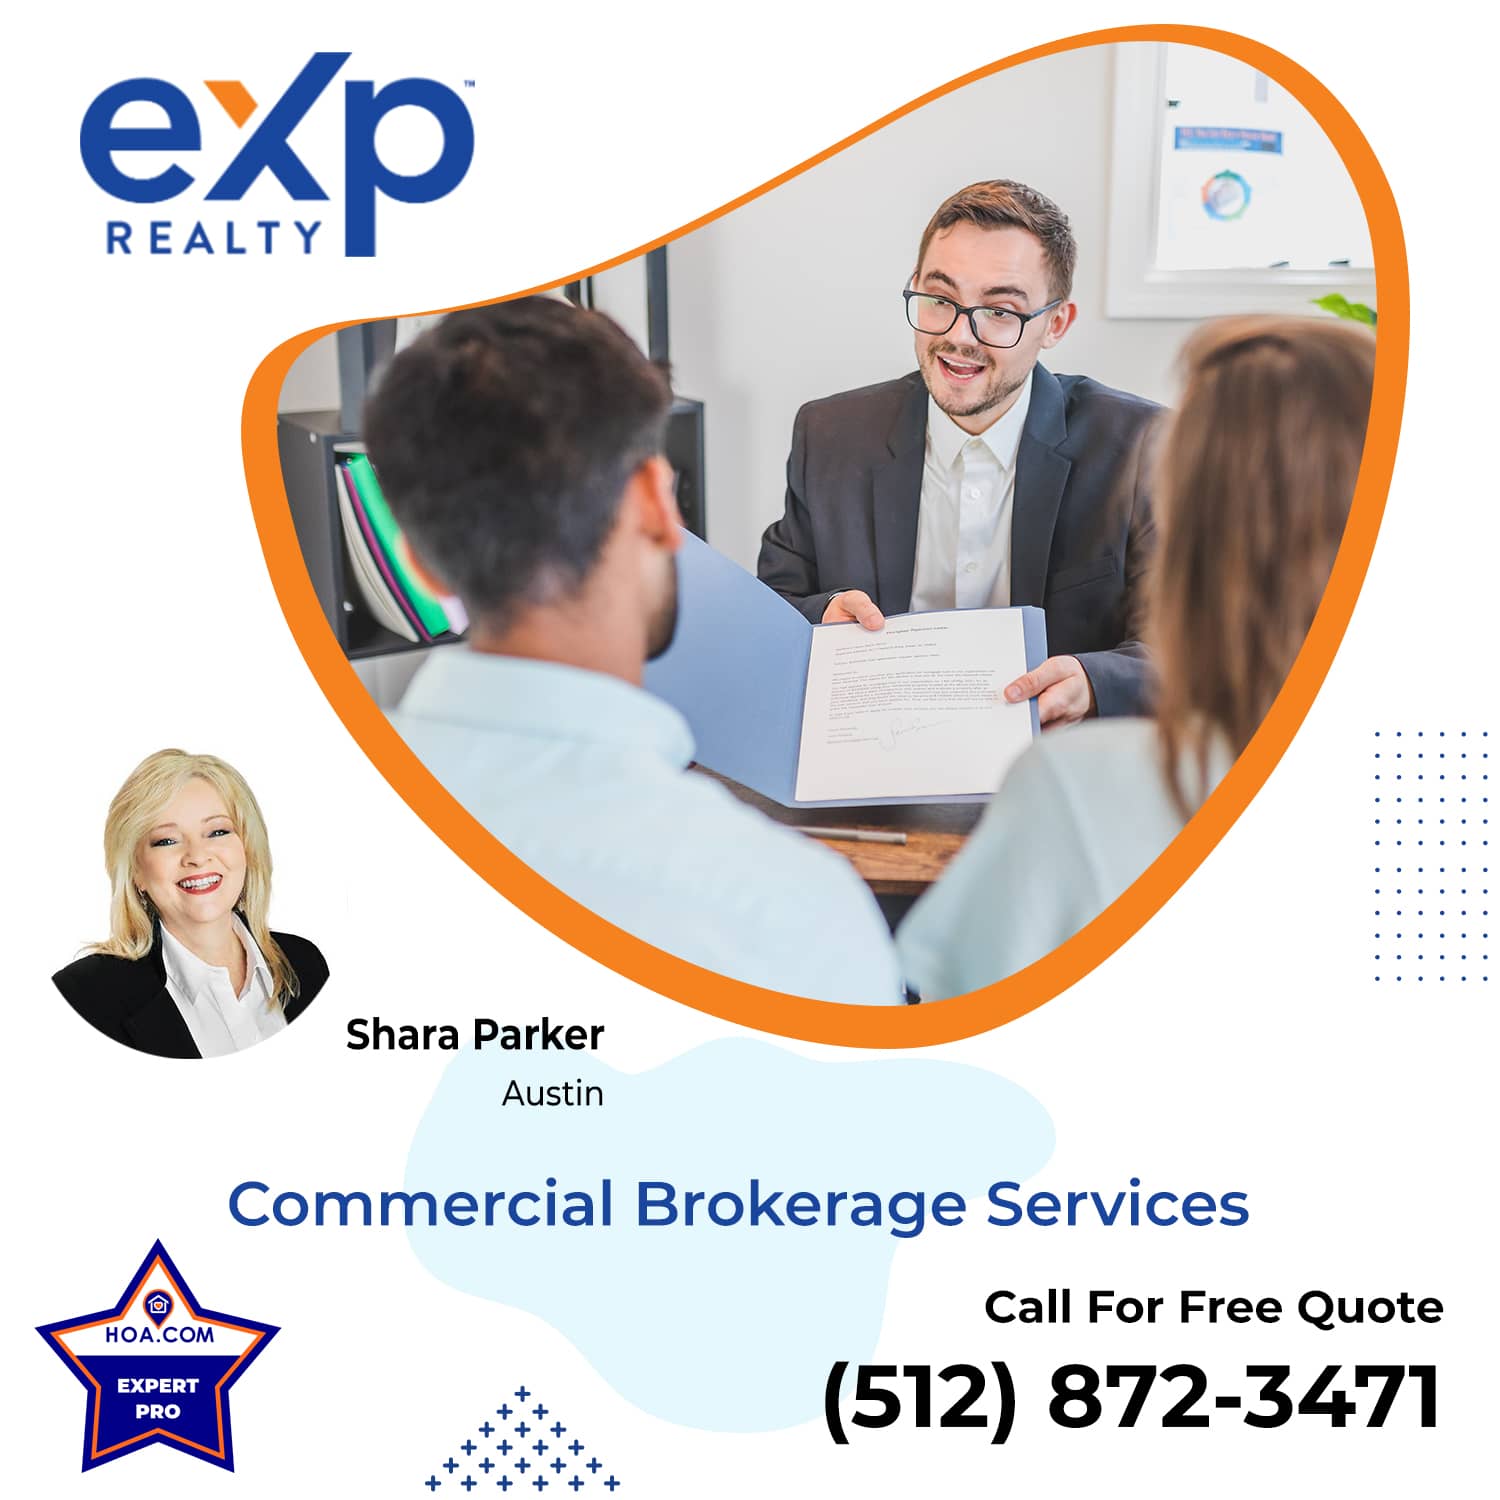 eXp-Shara Parker Brokerage Service